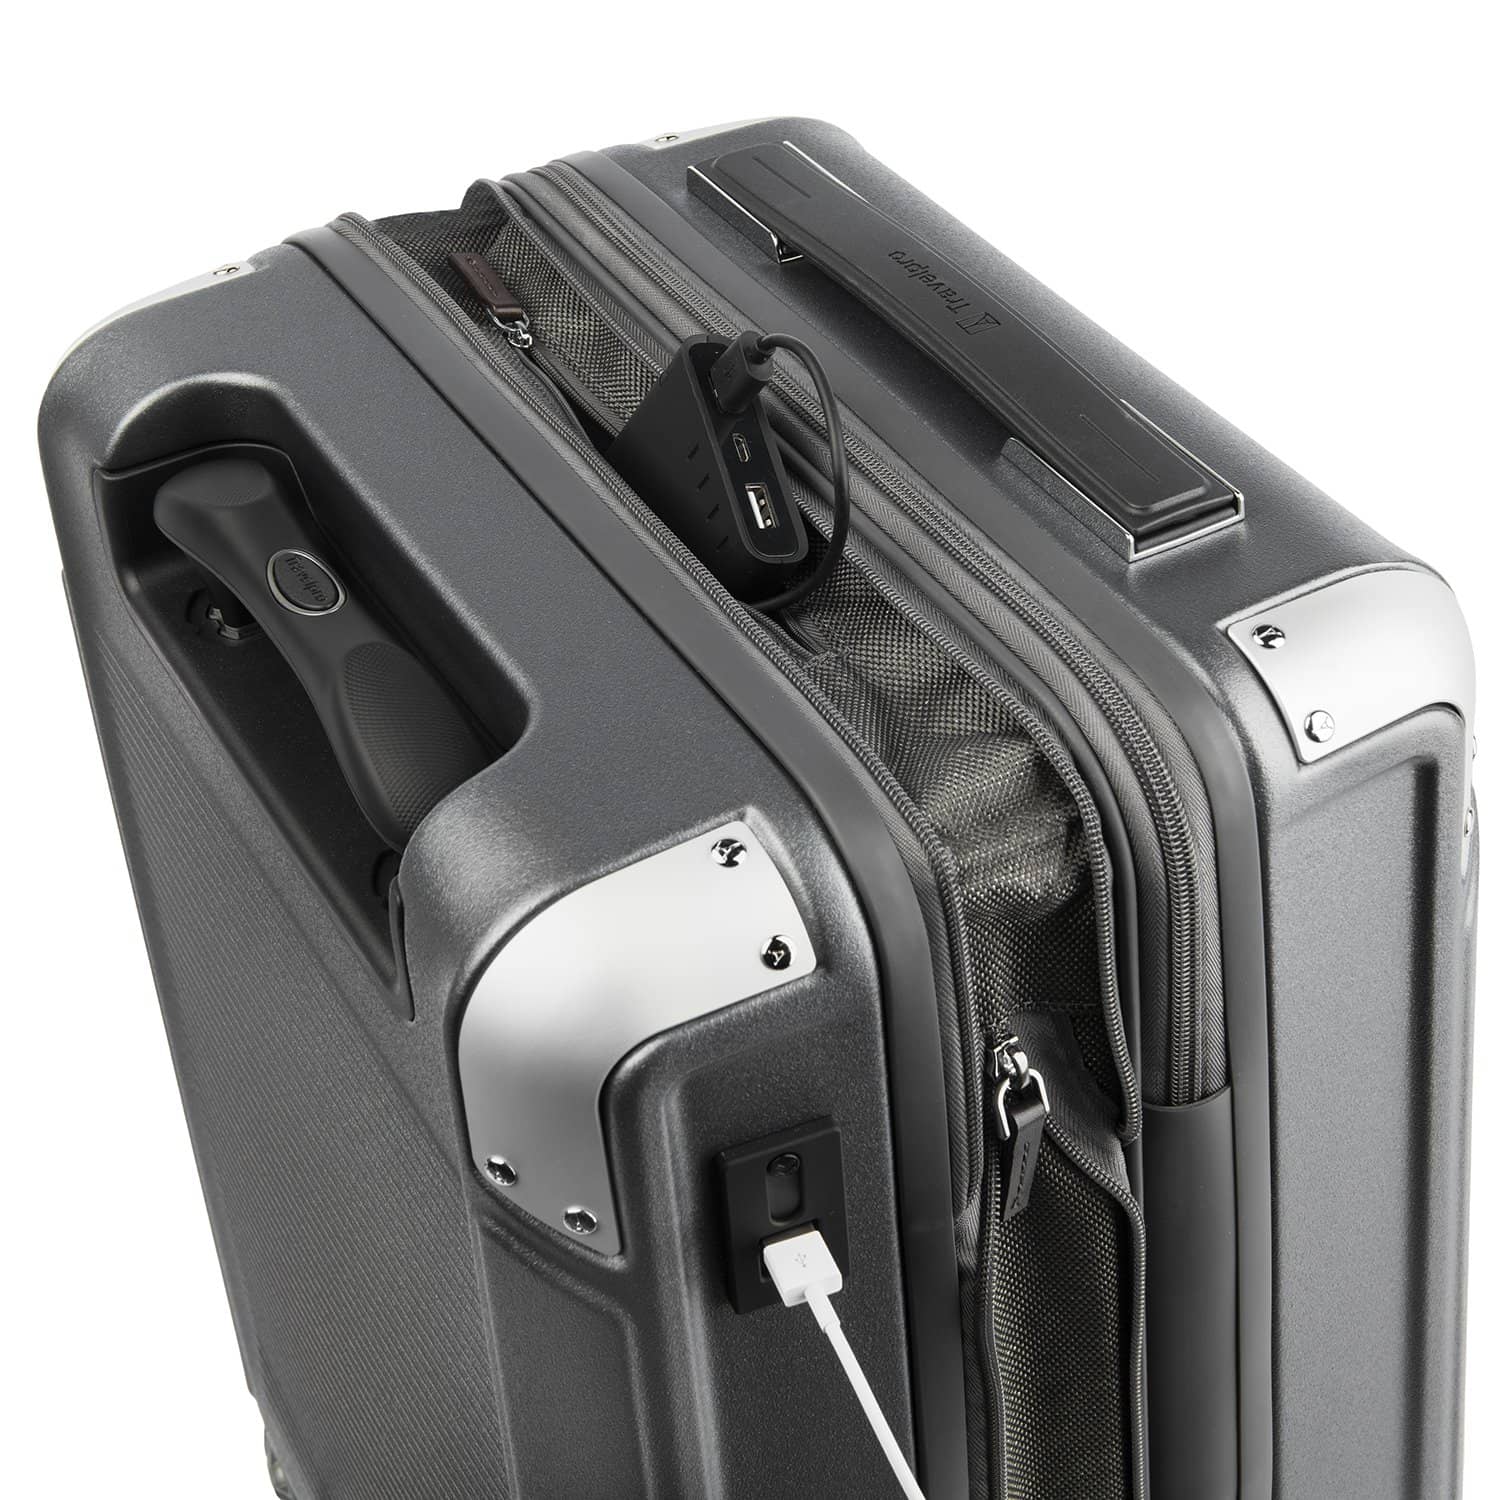 Travelpro Platinum Elite Hardside Carry-On Expandable Spinner